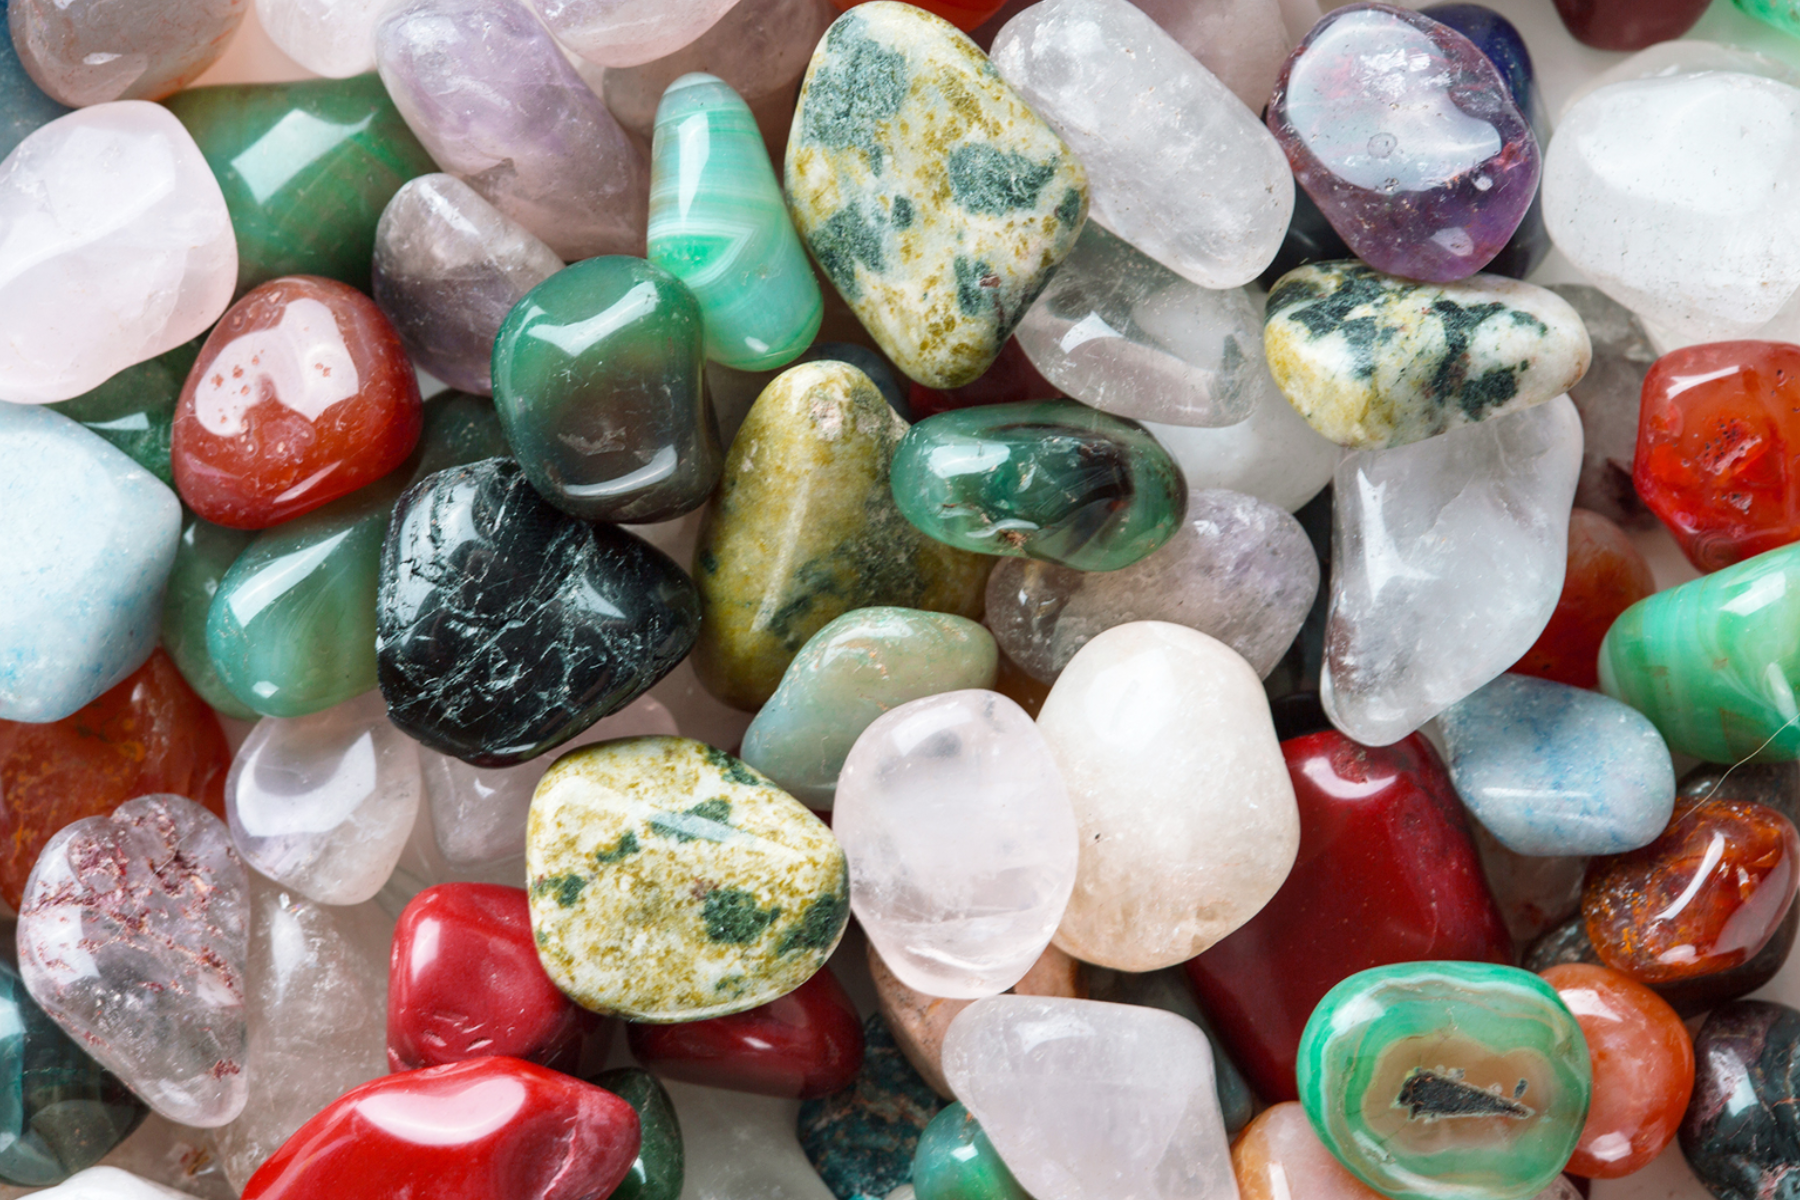 An assortment of various stones